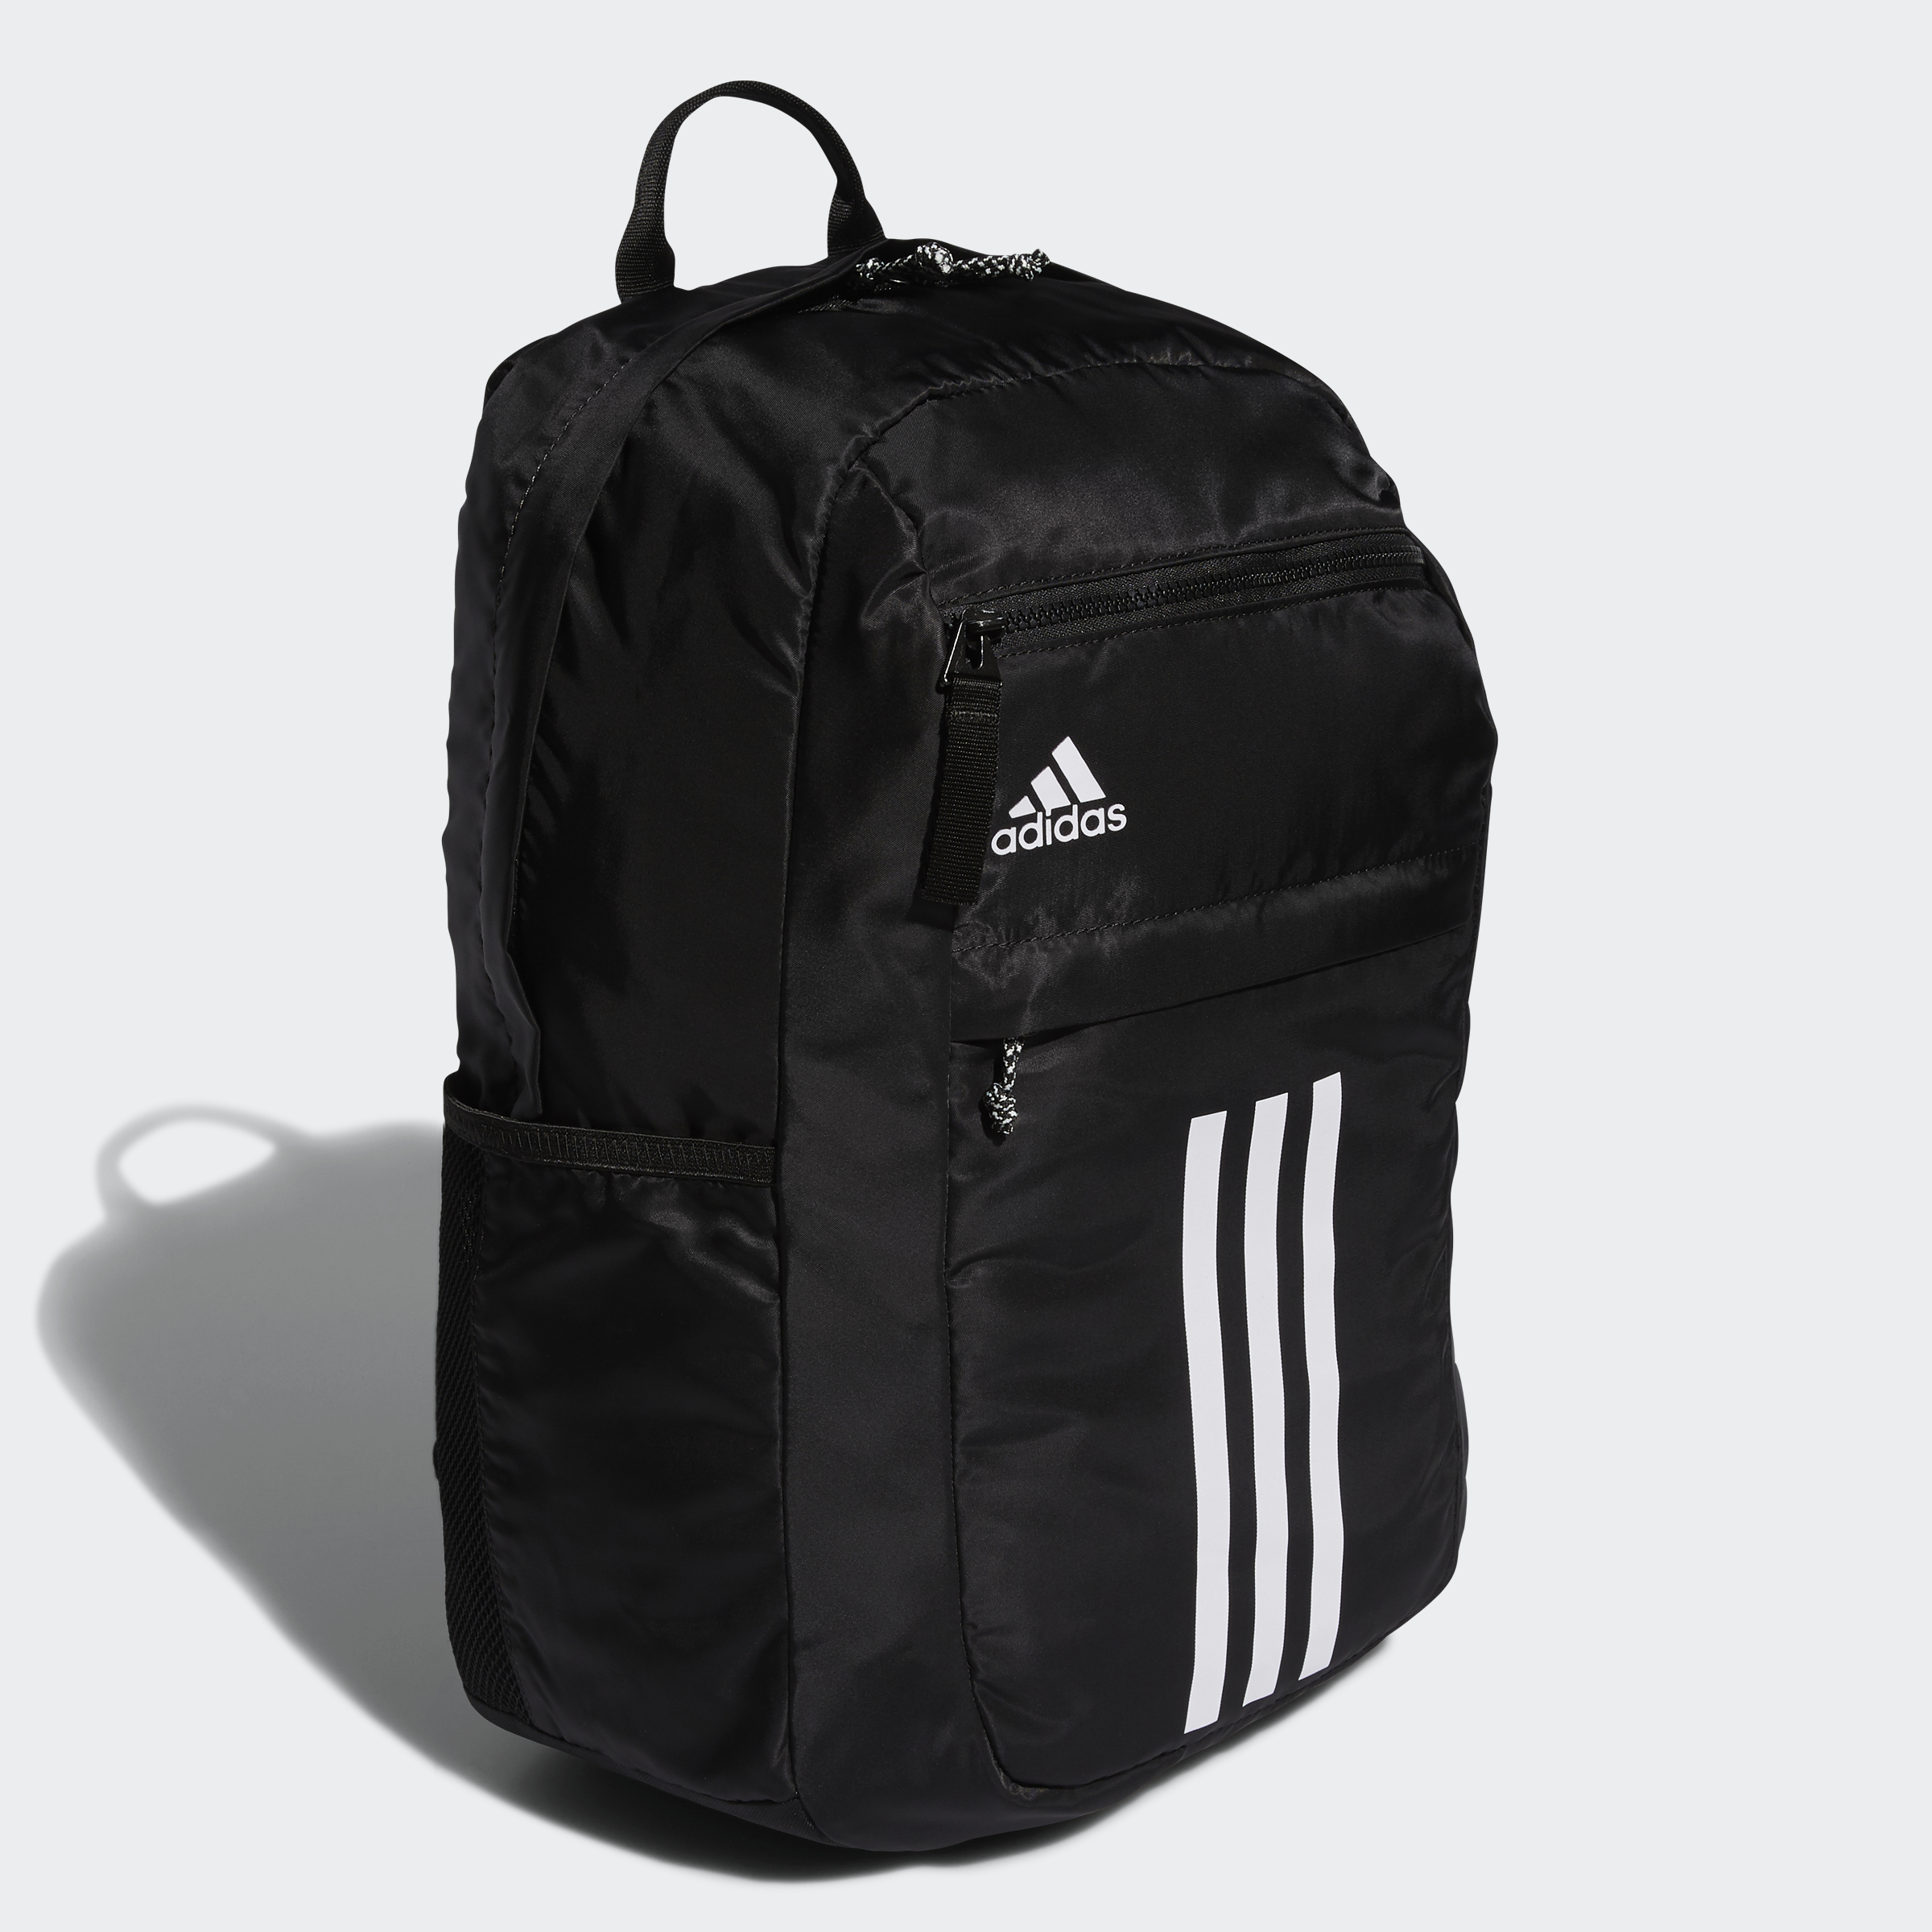 adidas League 3-Stripes Backpack Bags | eBay